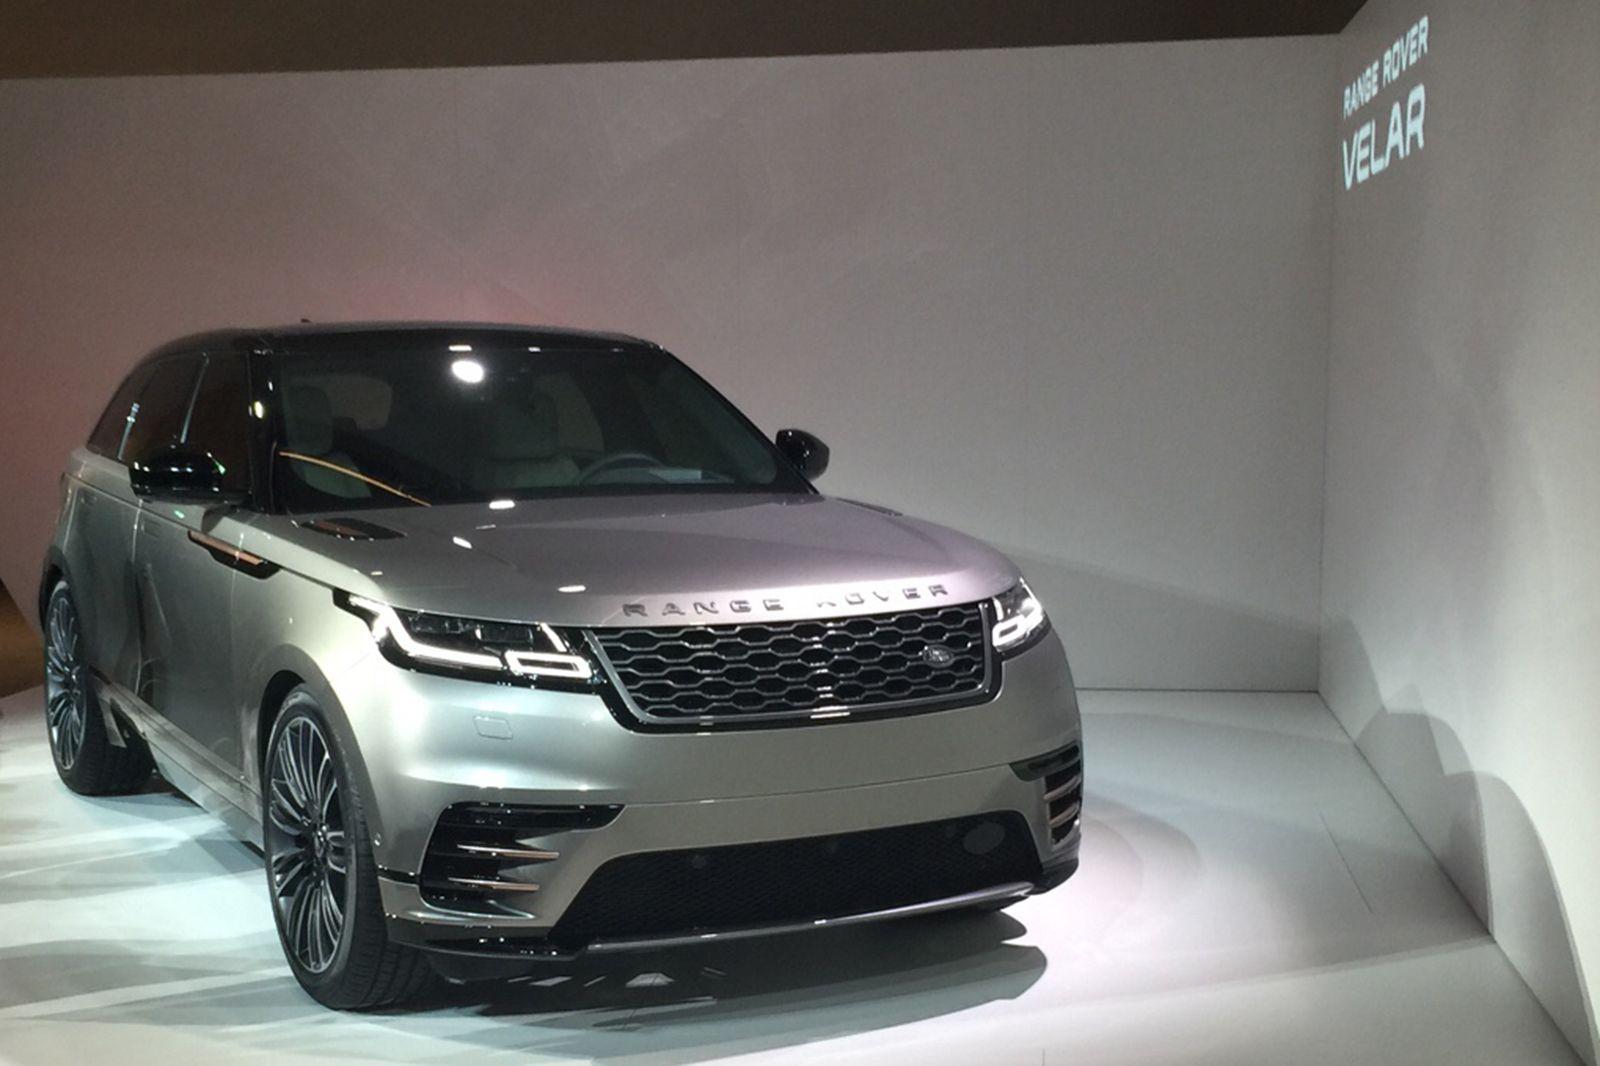 Range Rover Velar revealed: price, specs & interior